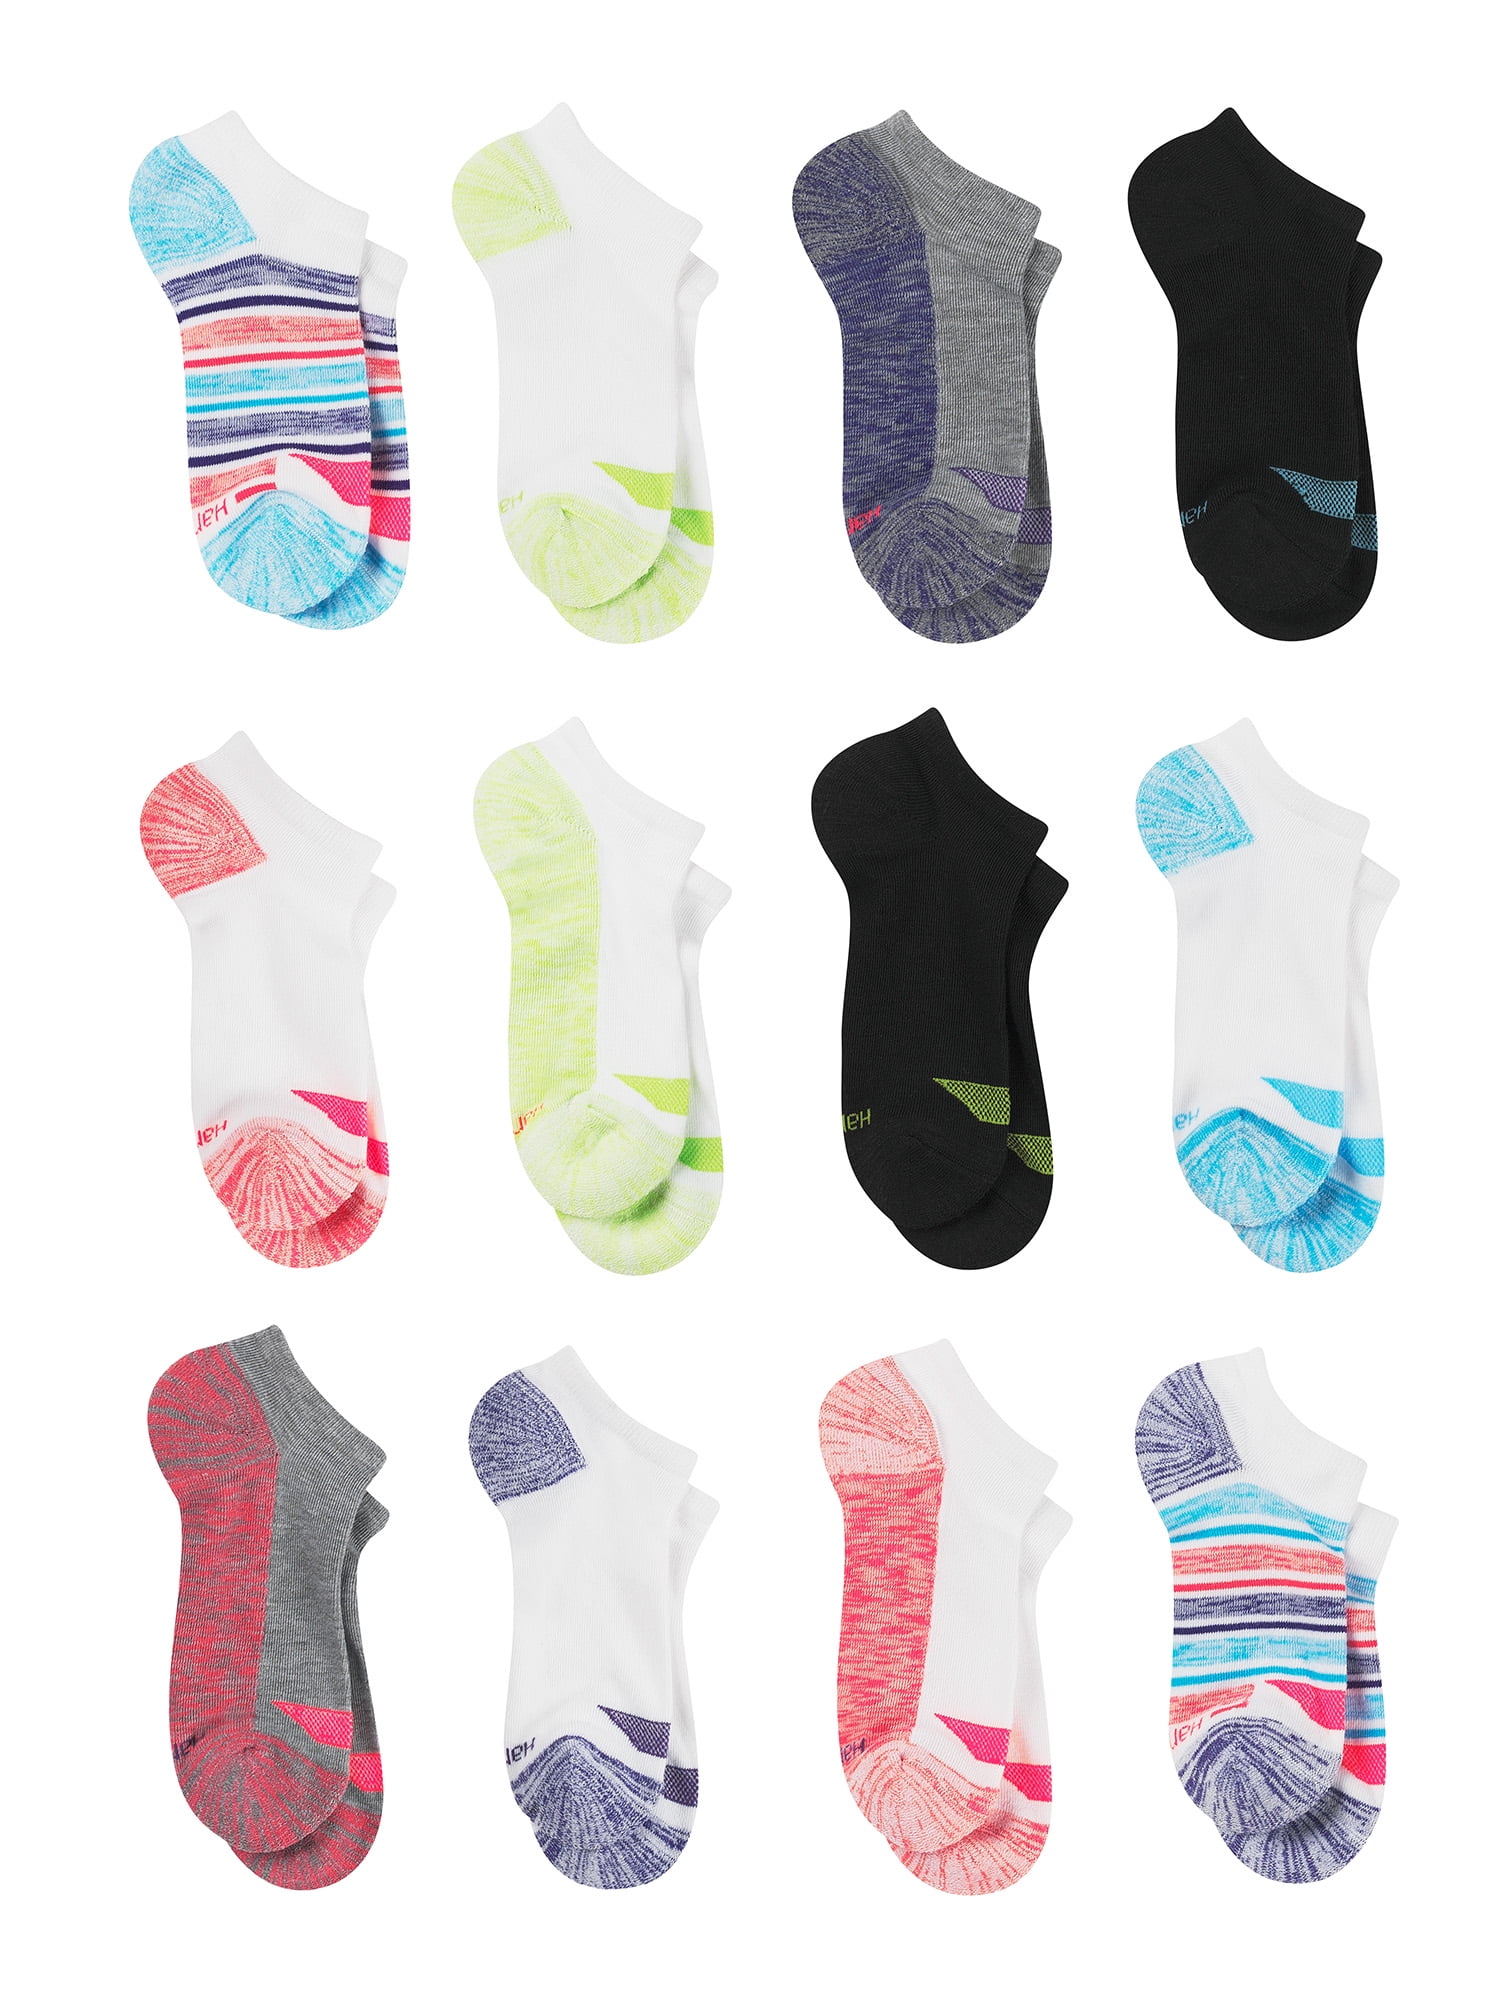 Hanes Girls' Socks, 12 Pack Cool Comfort No Show Socks, Size S-L - image 1 of 5